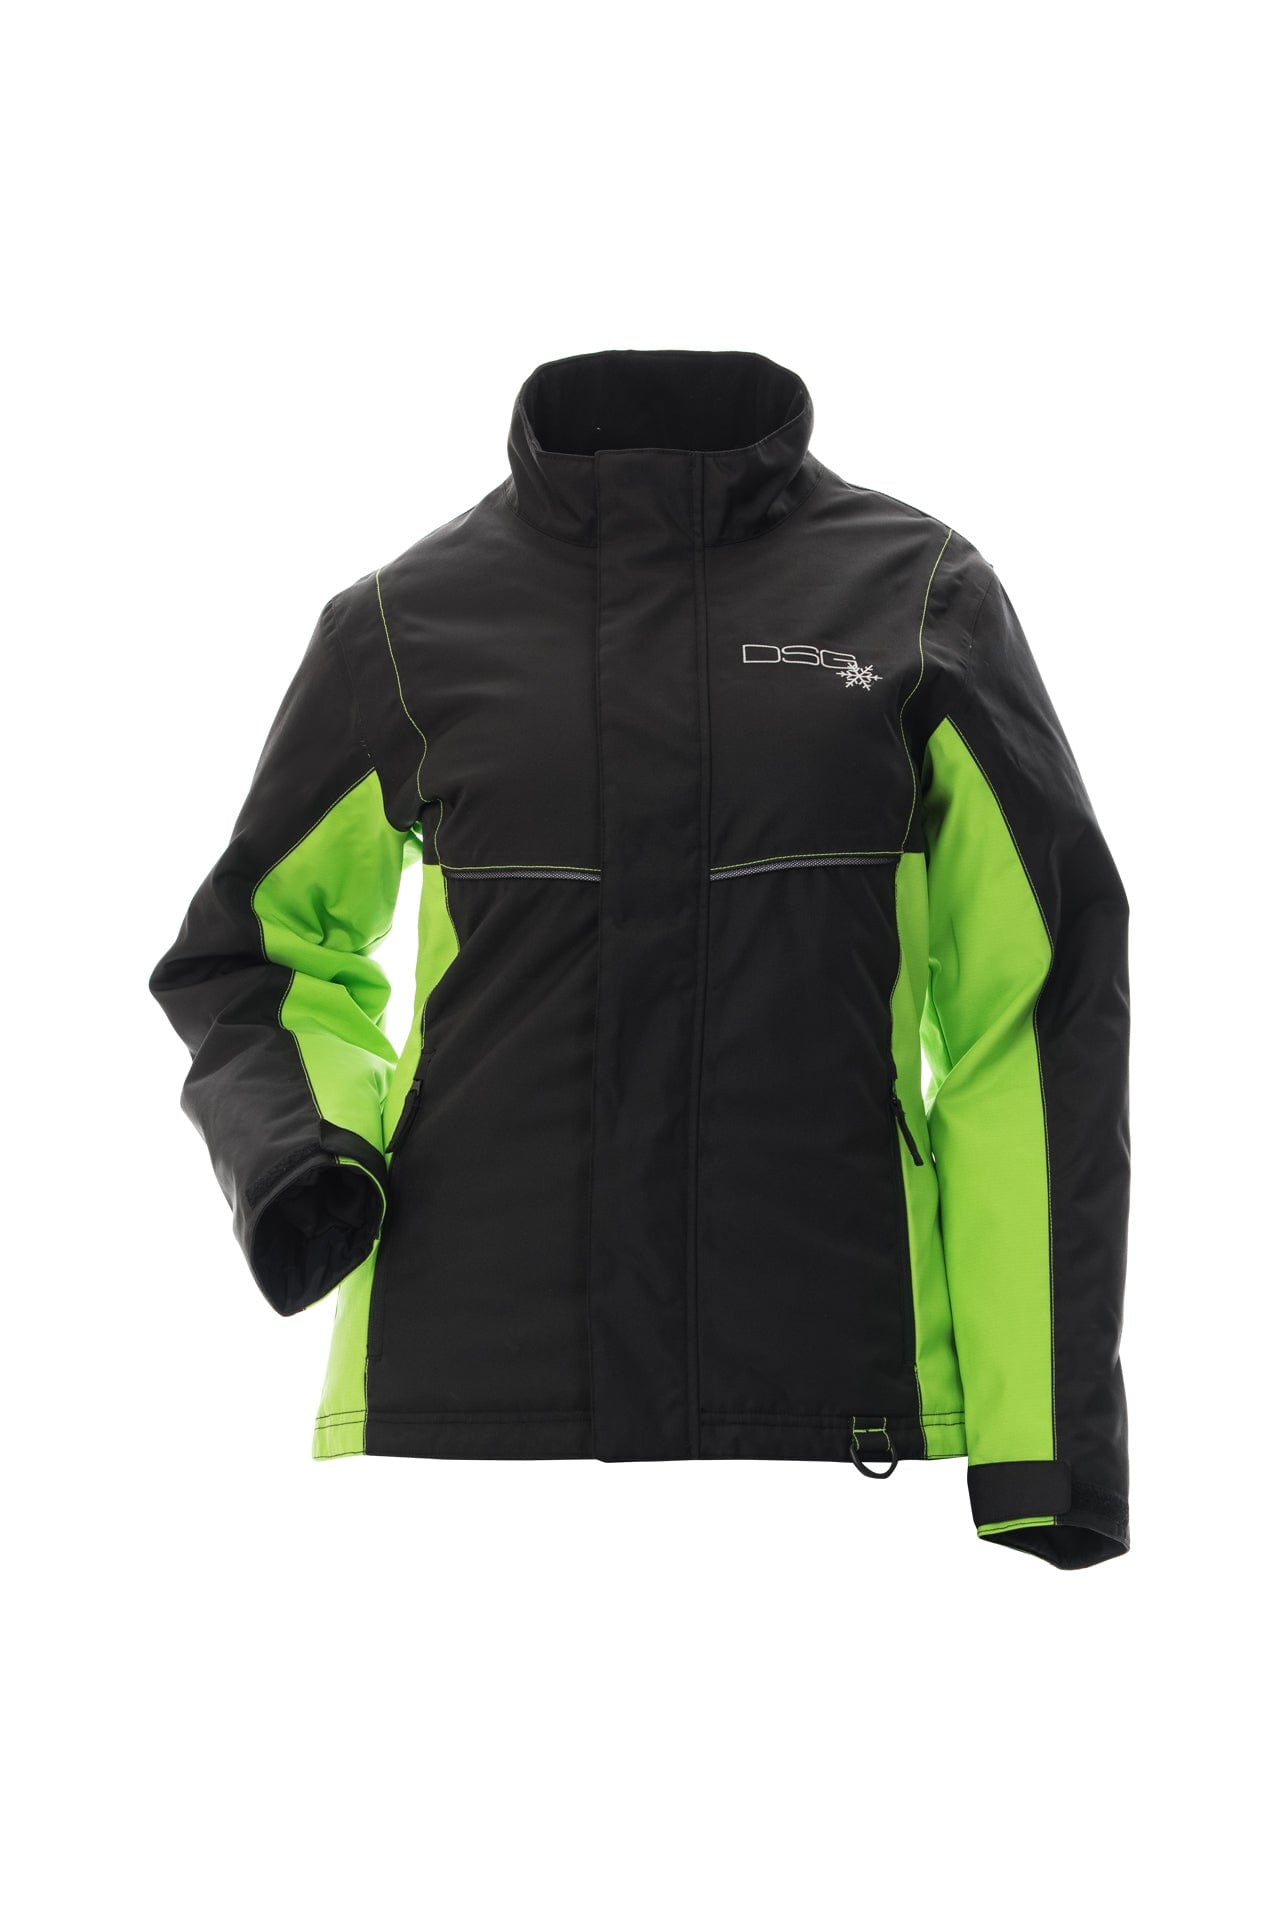 Western Powersports Jacket Black/Green Apple / 1XL Trail Jacket By Dsg 45436